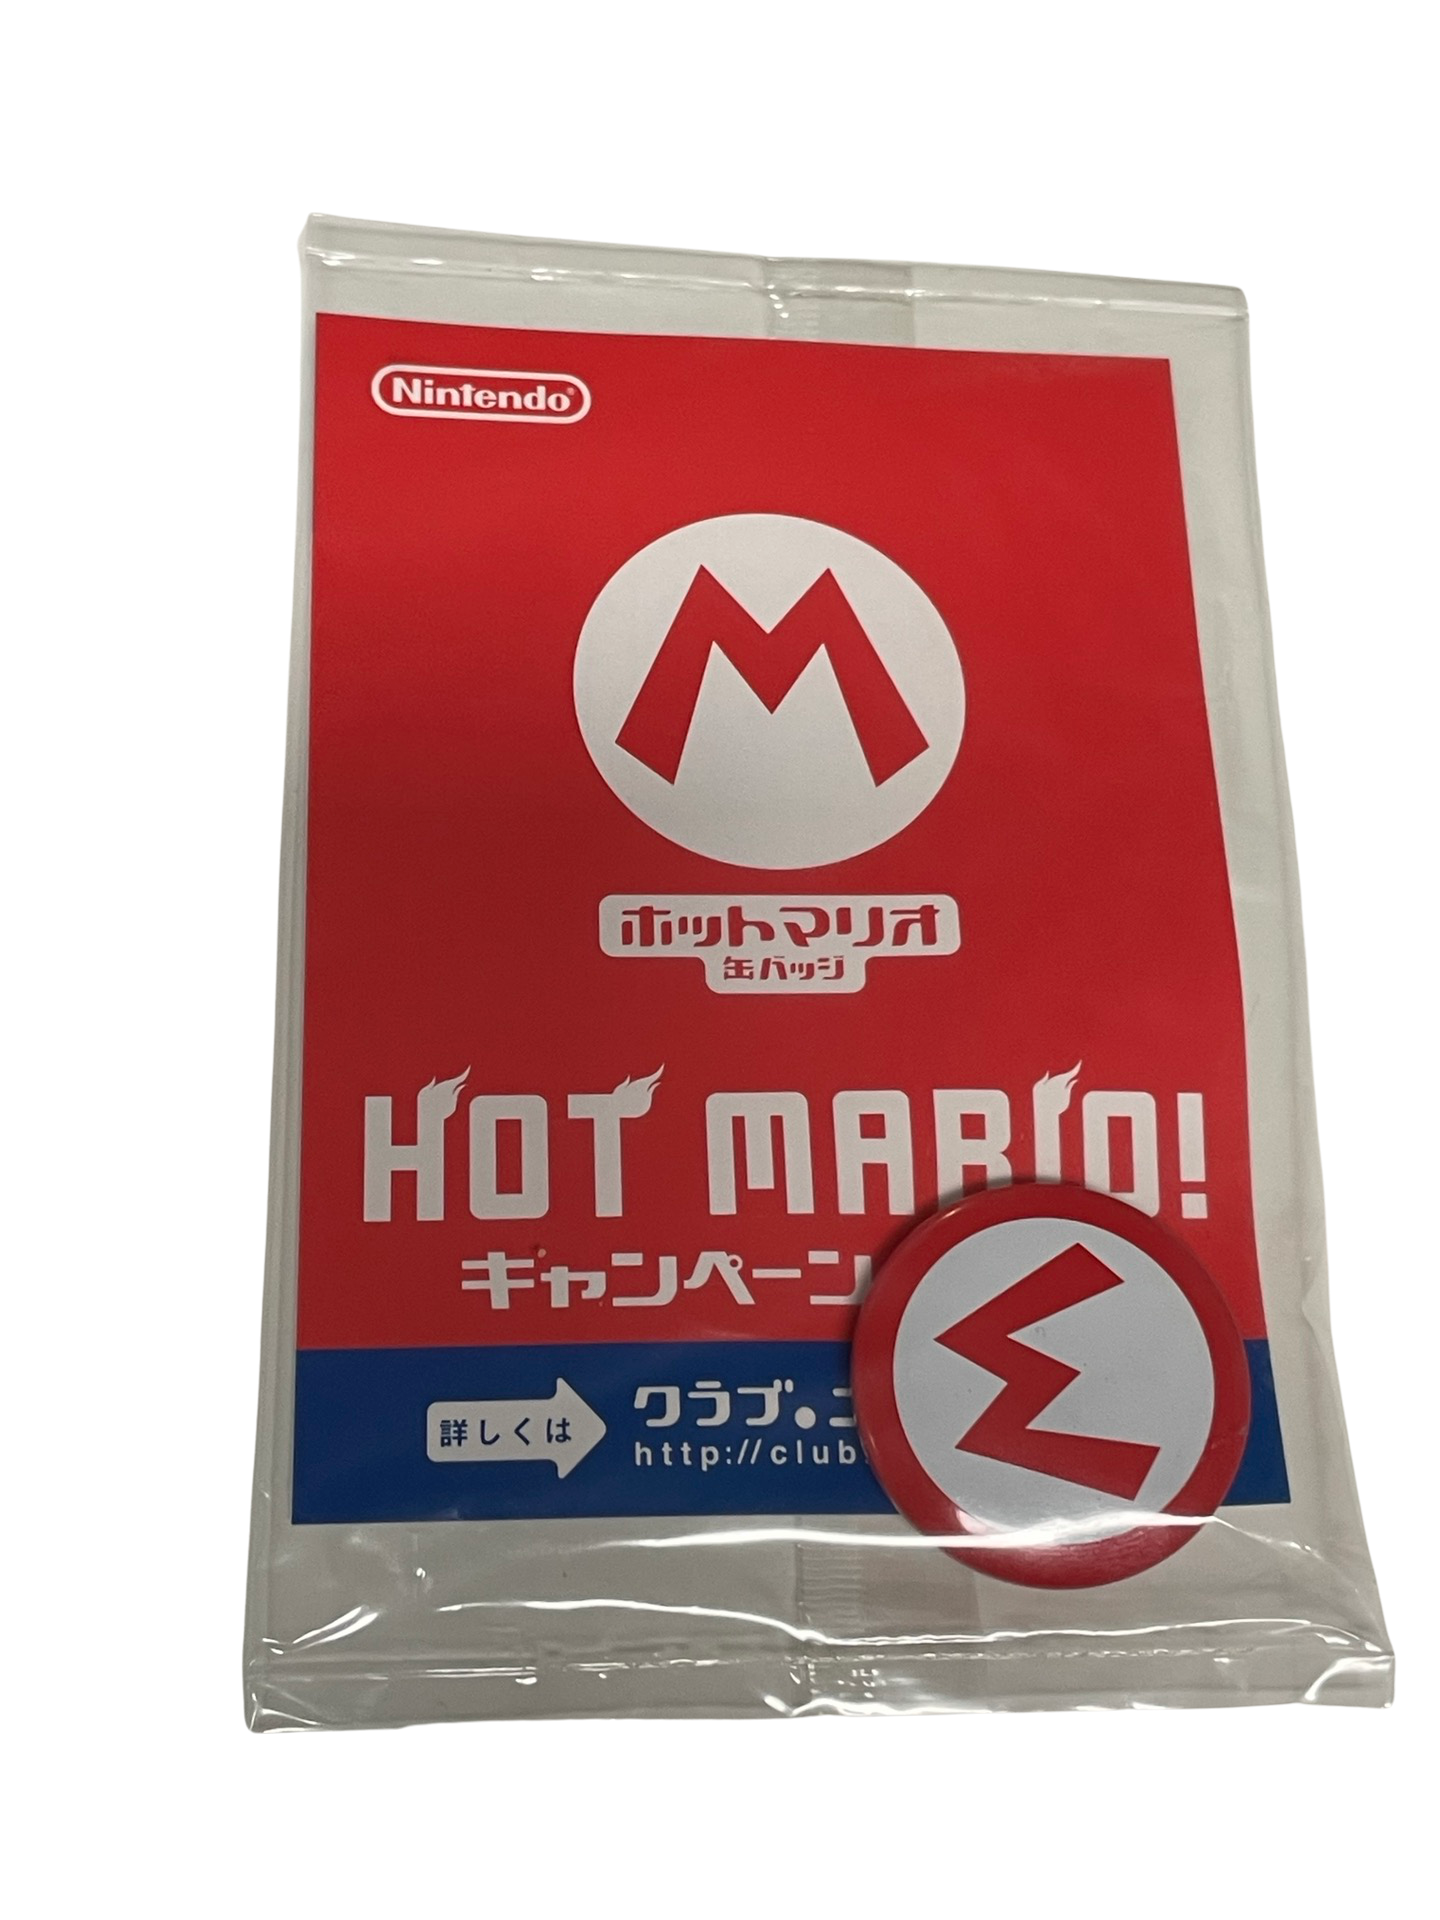 Club Nintendo 20th Anniversary Hot Mario Campaign 2004 Button Badge Japan DS08 PINS freeshipping - Retrofollie